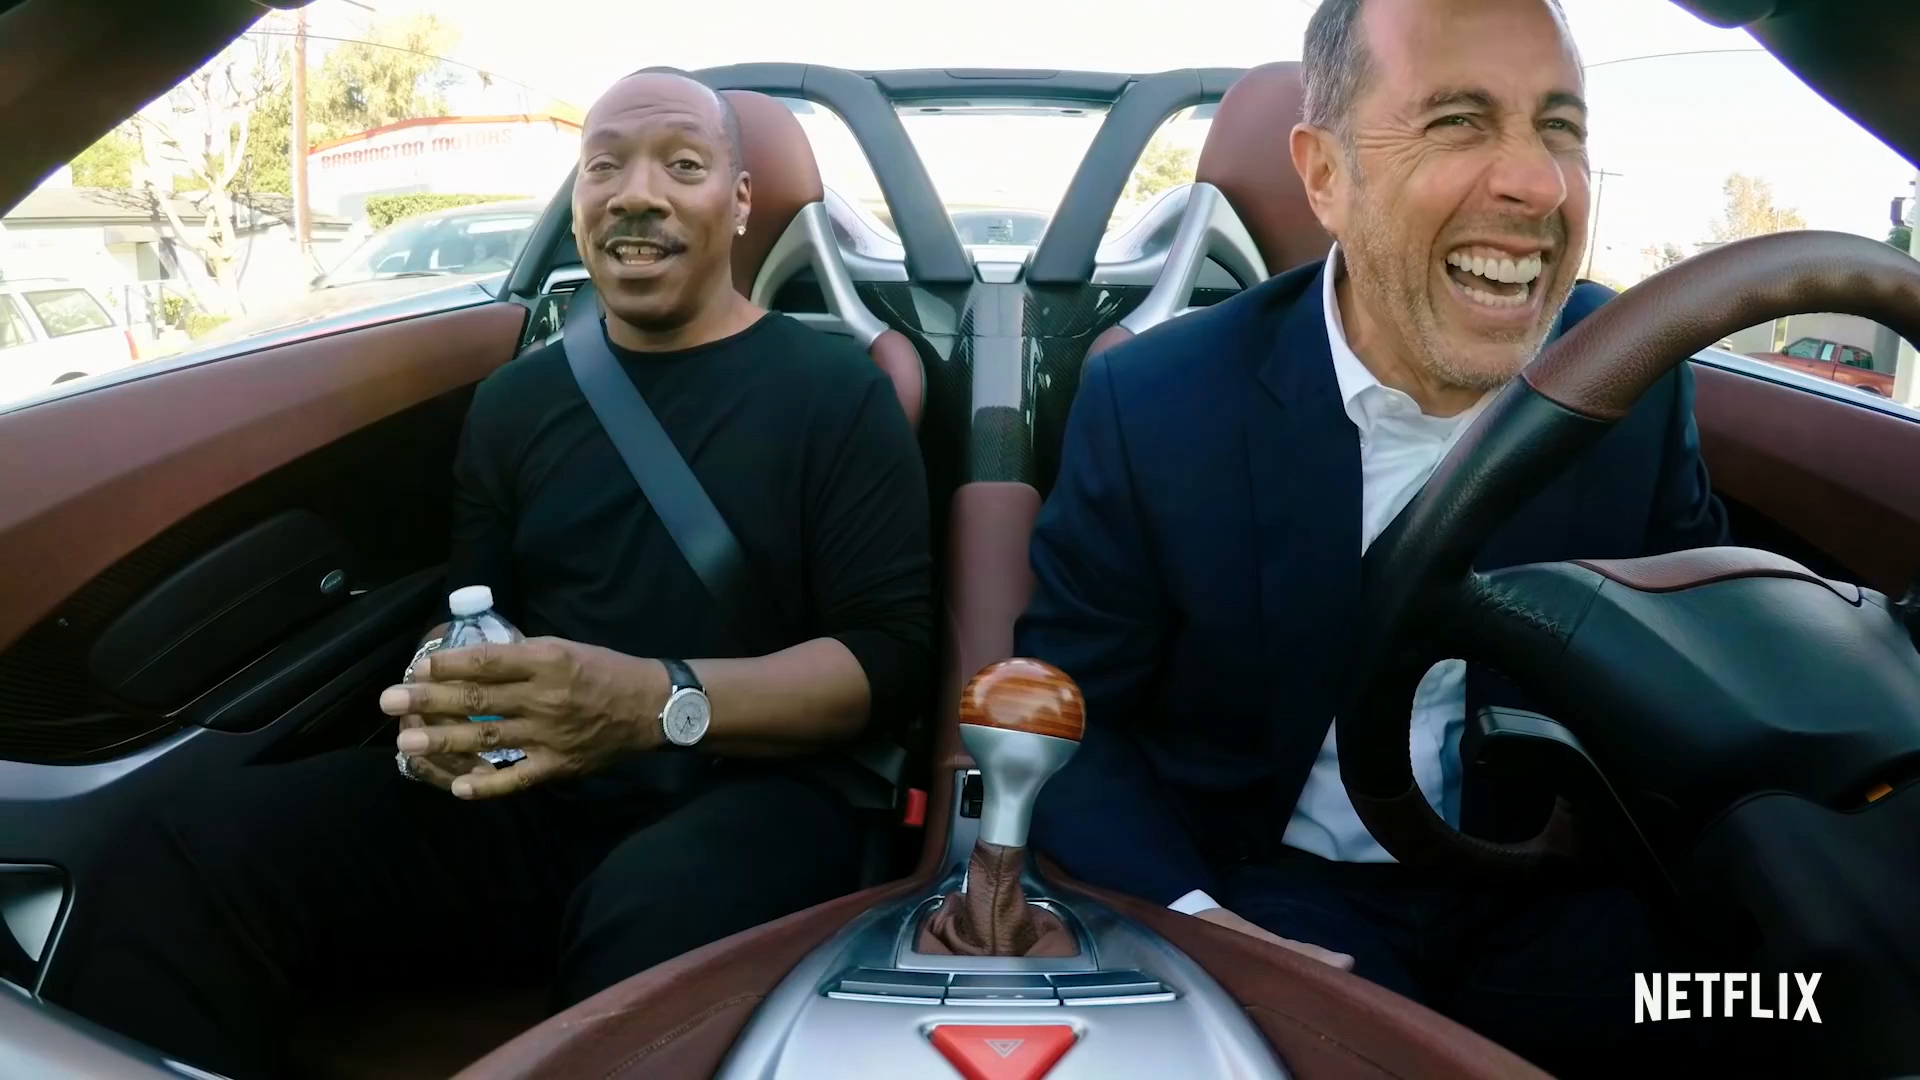 Comedians in Cars Getting Coffee (Season 1) / Comedians in Cars Getting Coffee (Season 1) (2012)